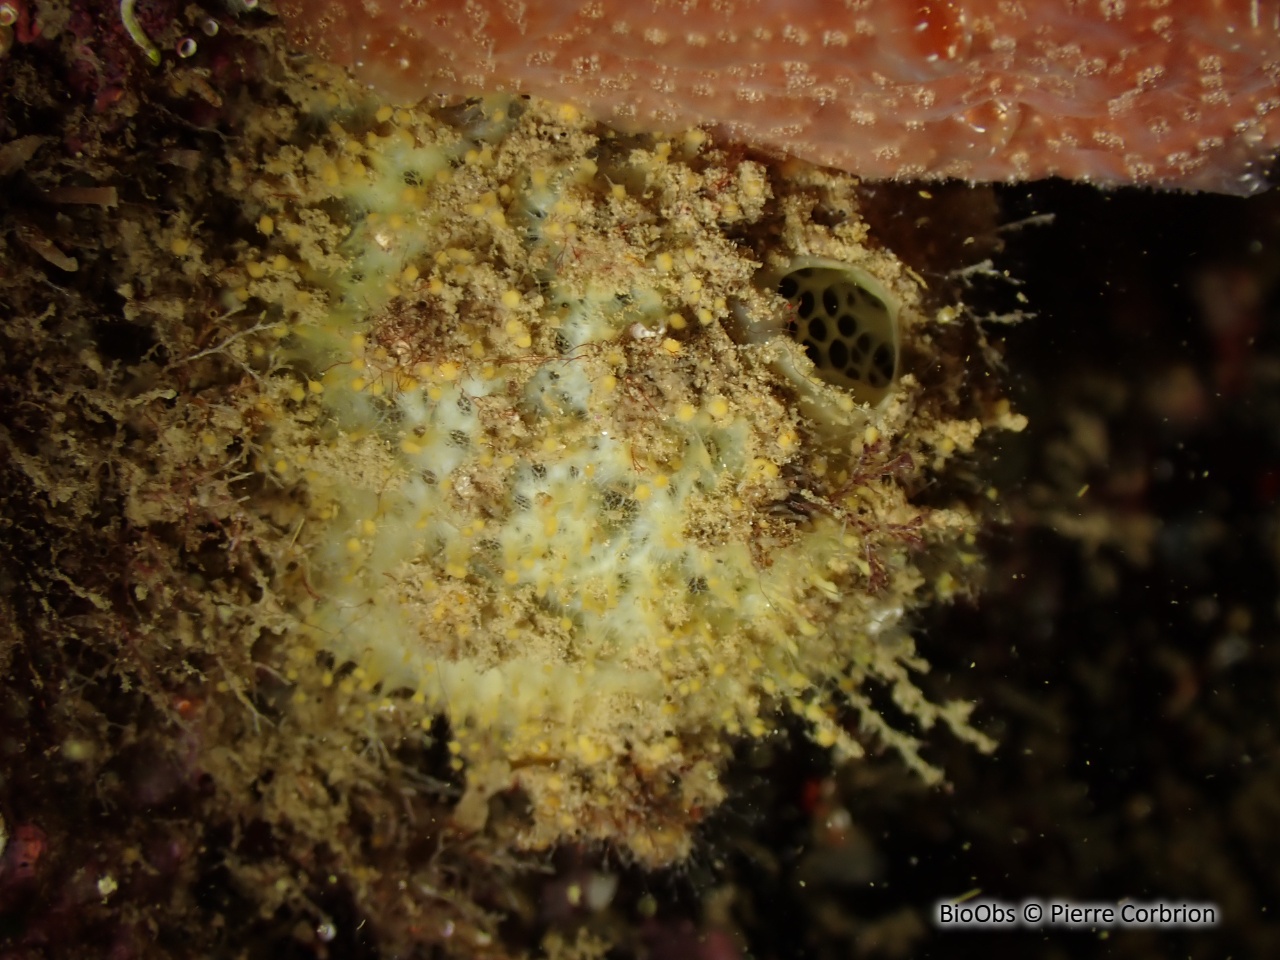 Orange de mer blanche de Méditerranée - Tethya meloni - Pierre Corbrion - BioObs